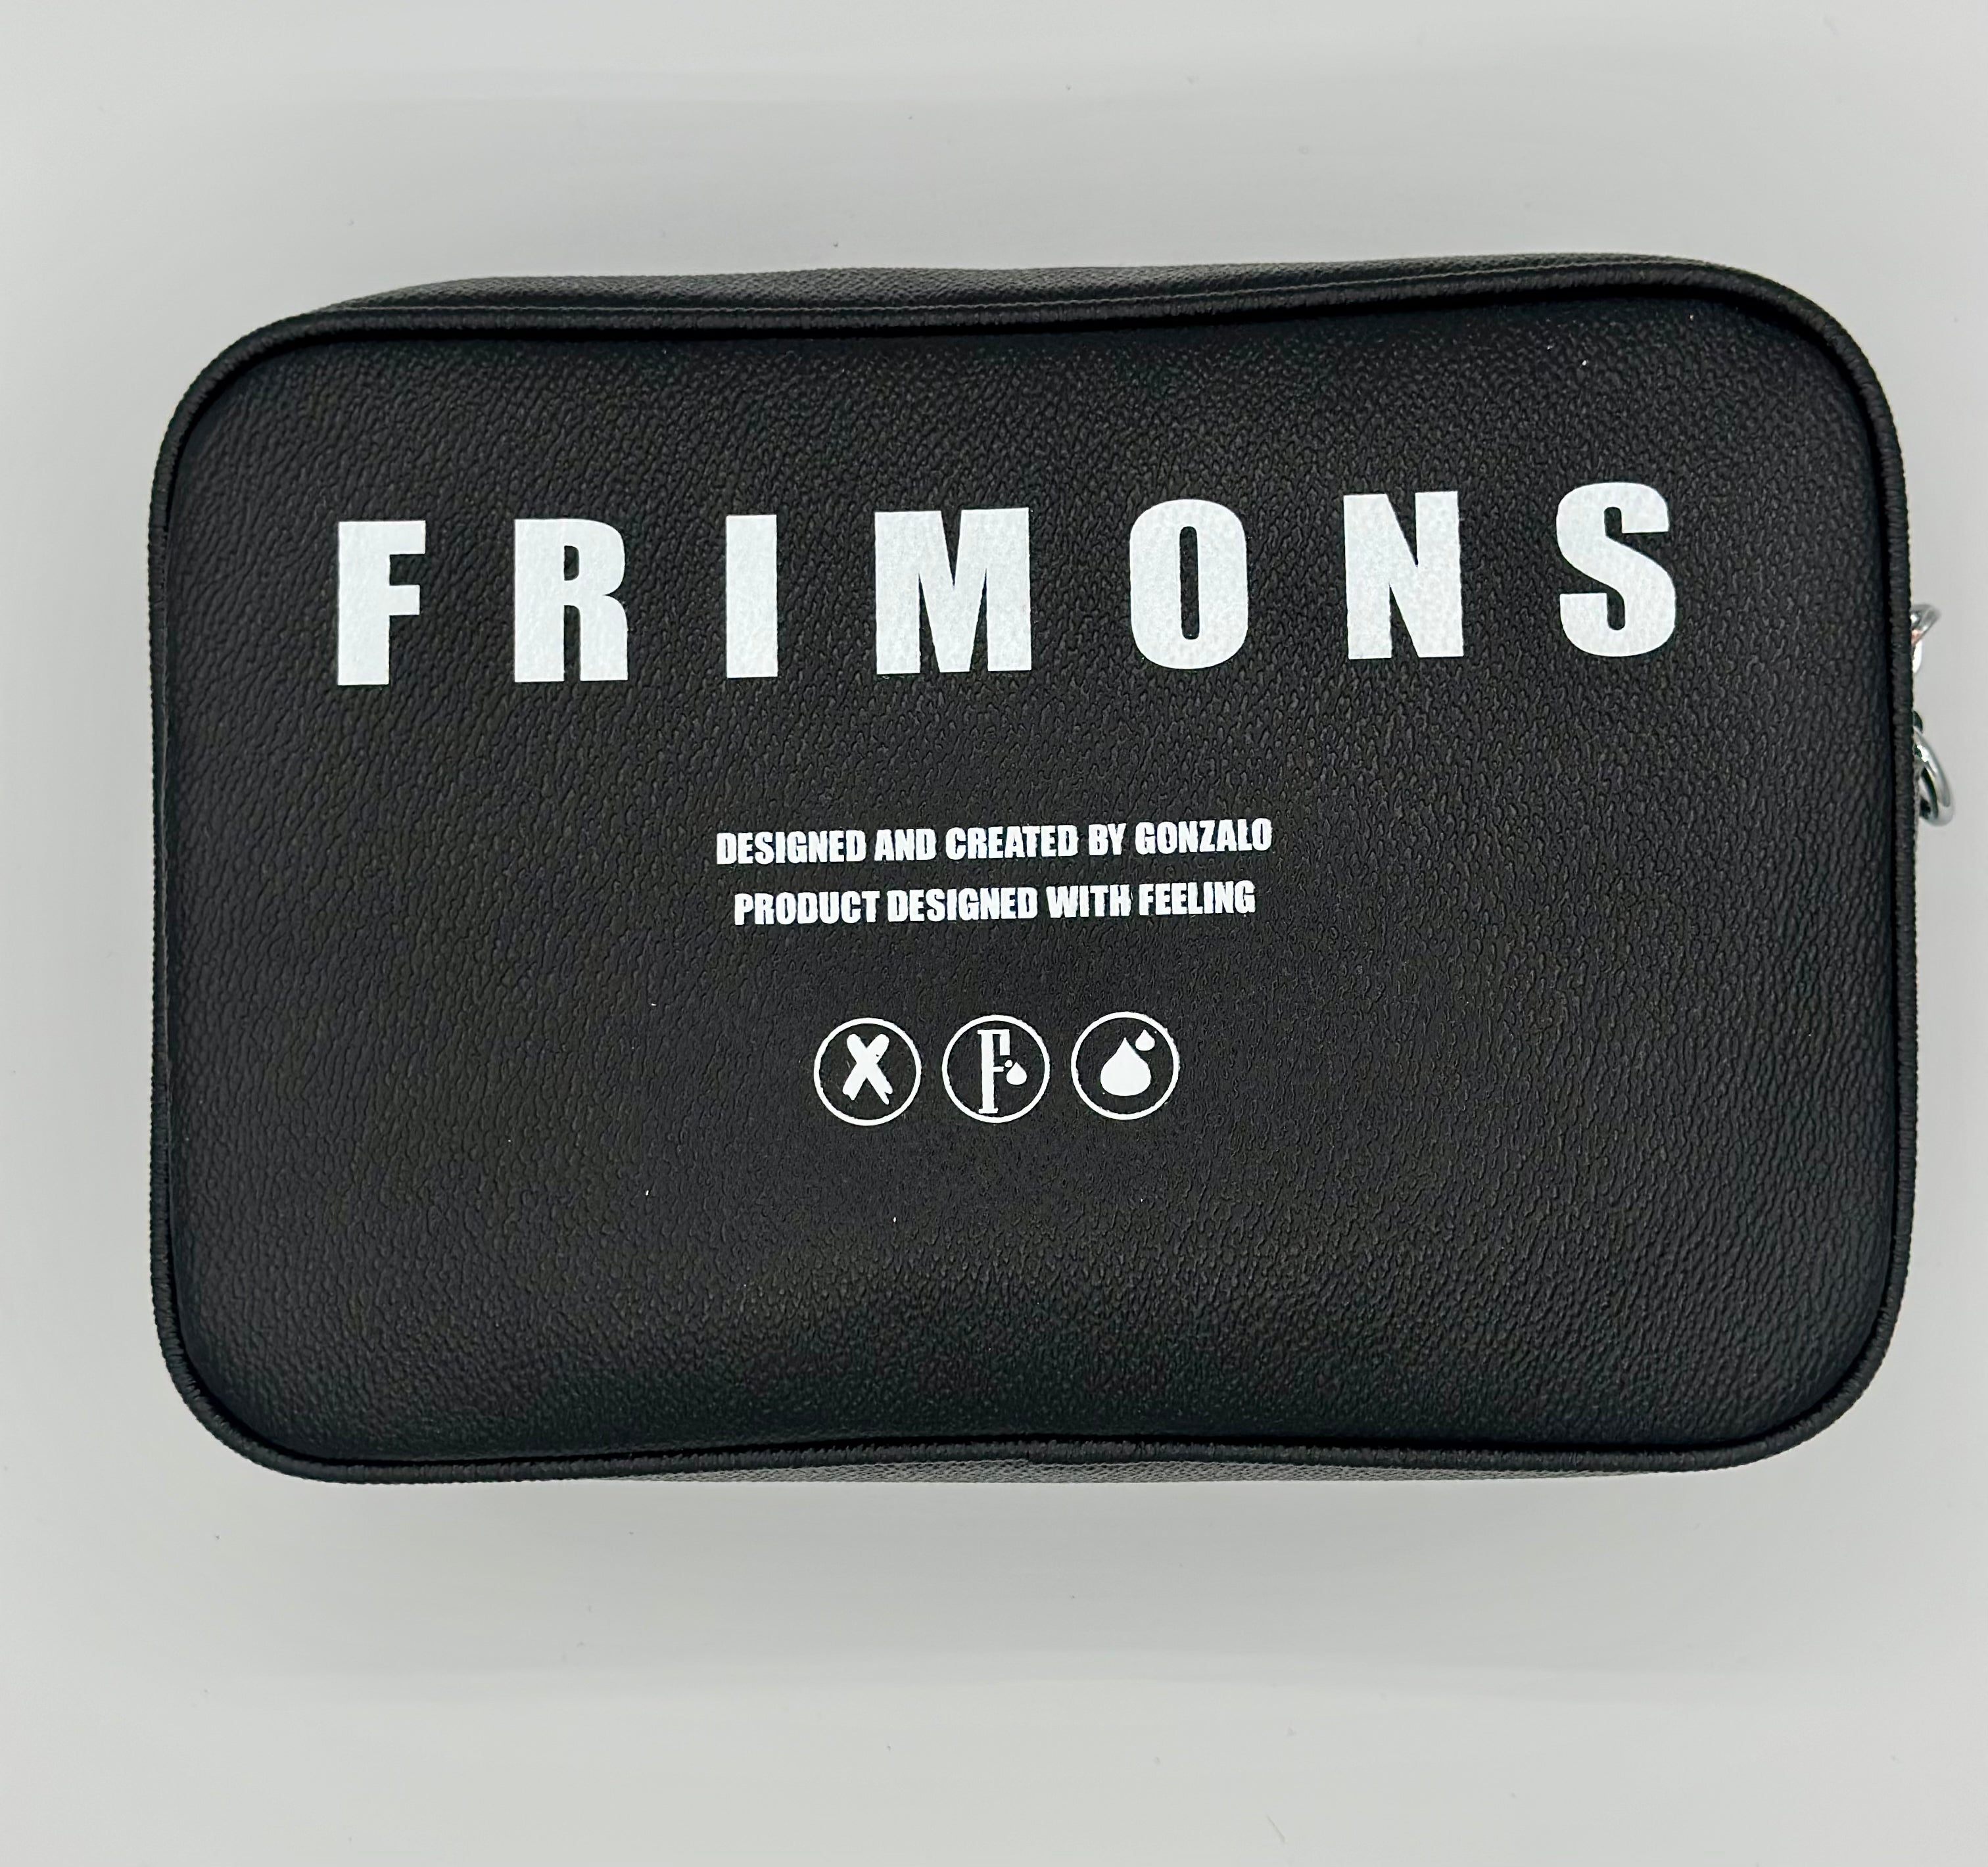 FRIMONS S3 BLACK